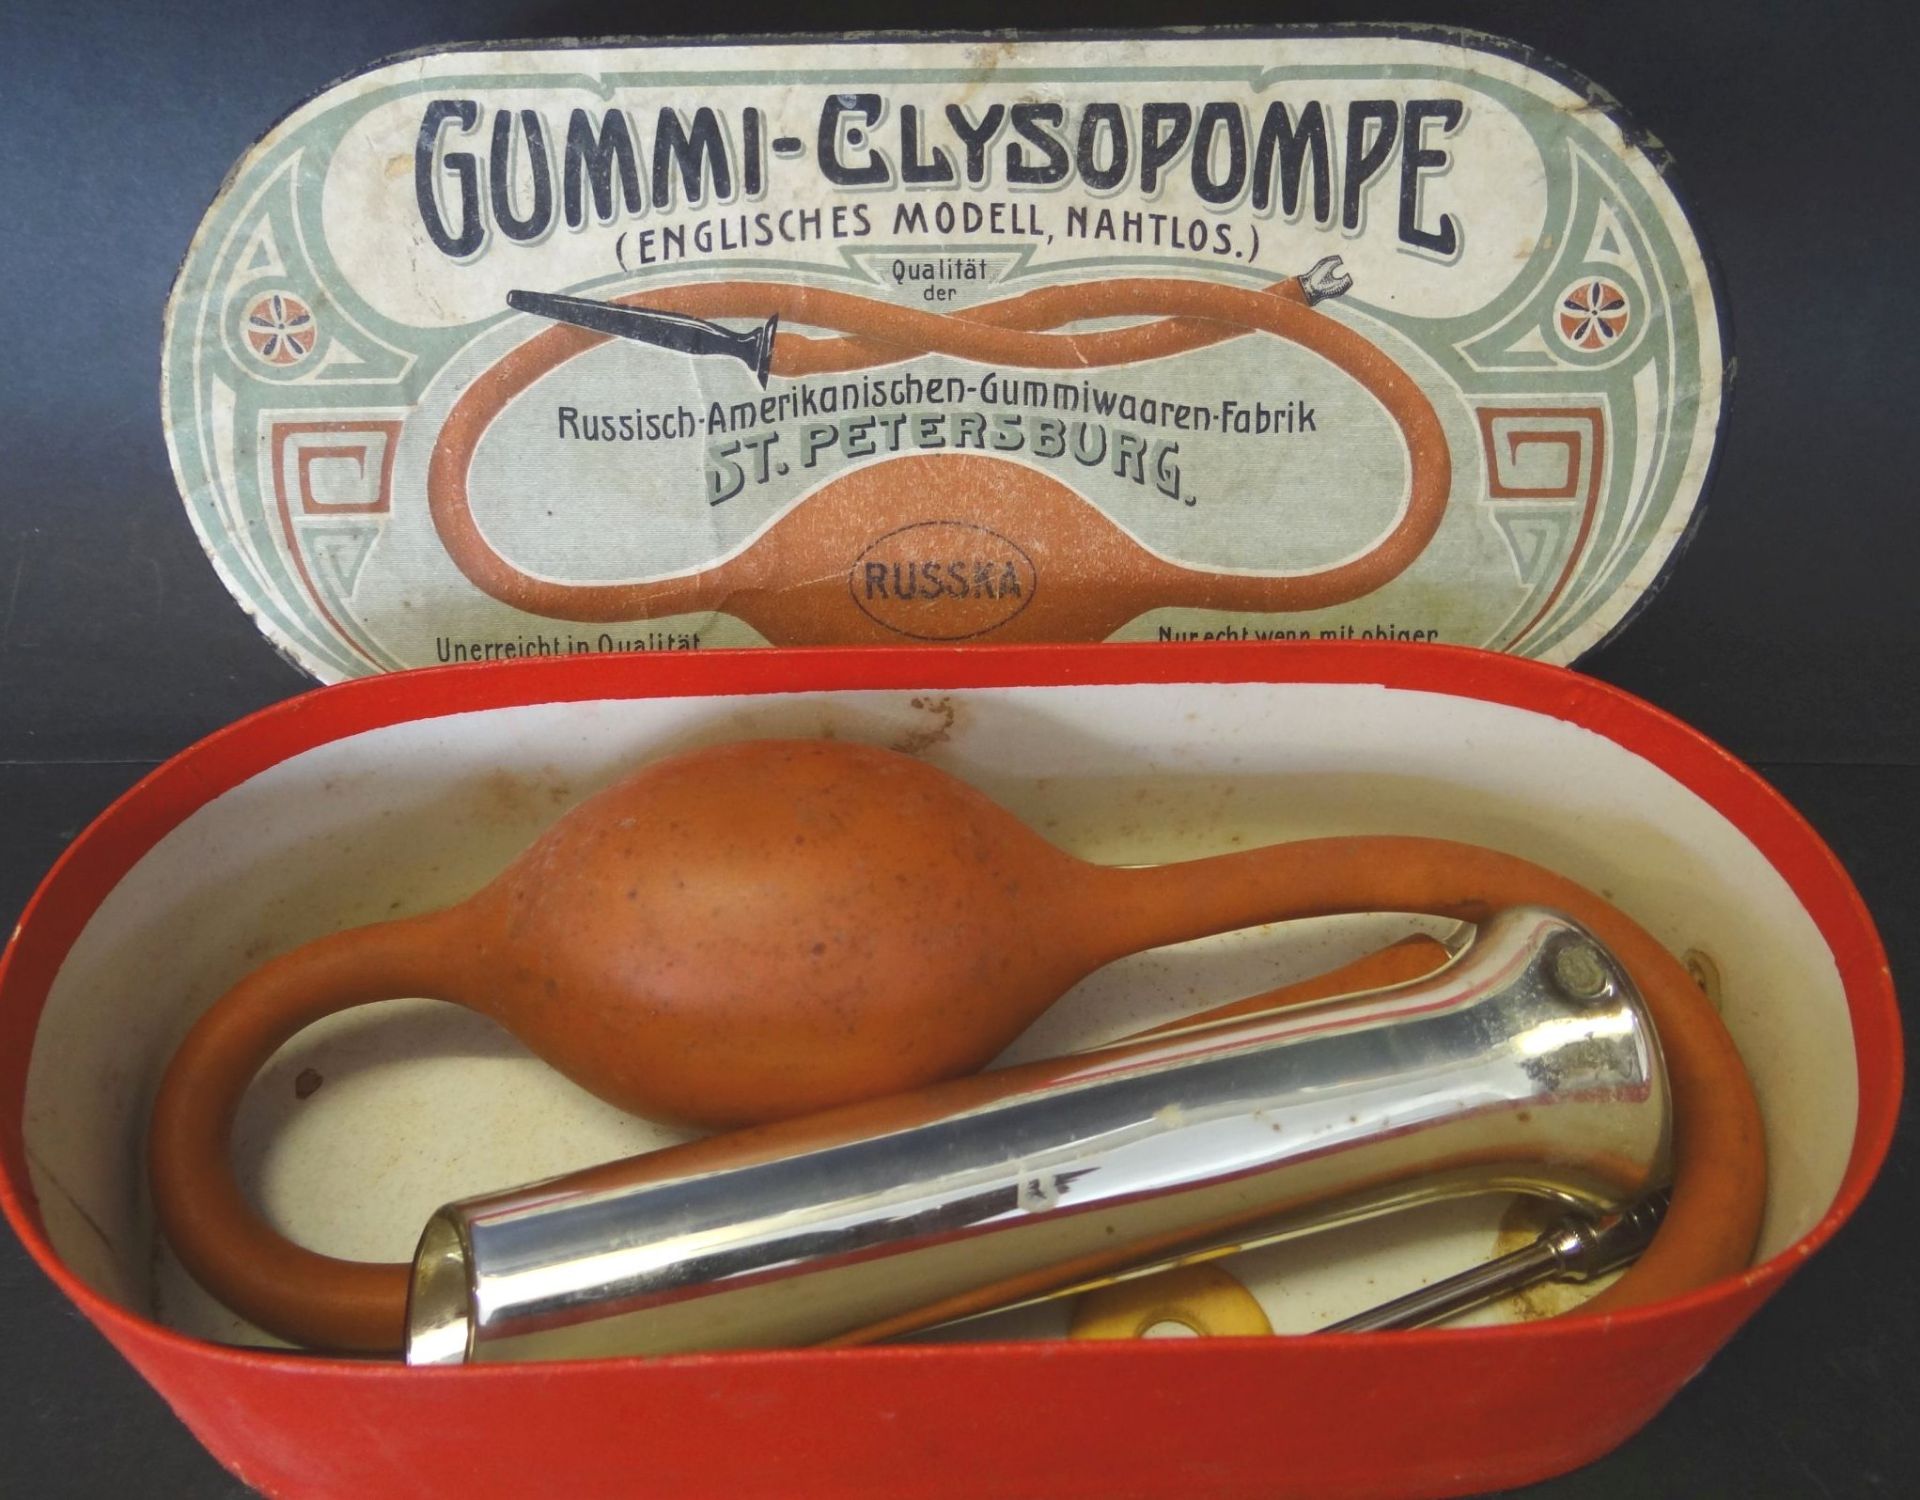 Gummi Glysopompe in Jugendstil-Spanholschachtel, H-6 cm, 20x9 cm - Bild 5 aus 5